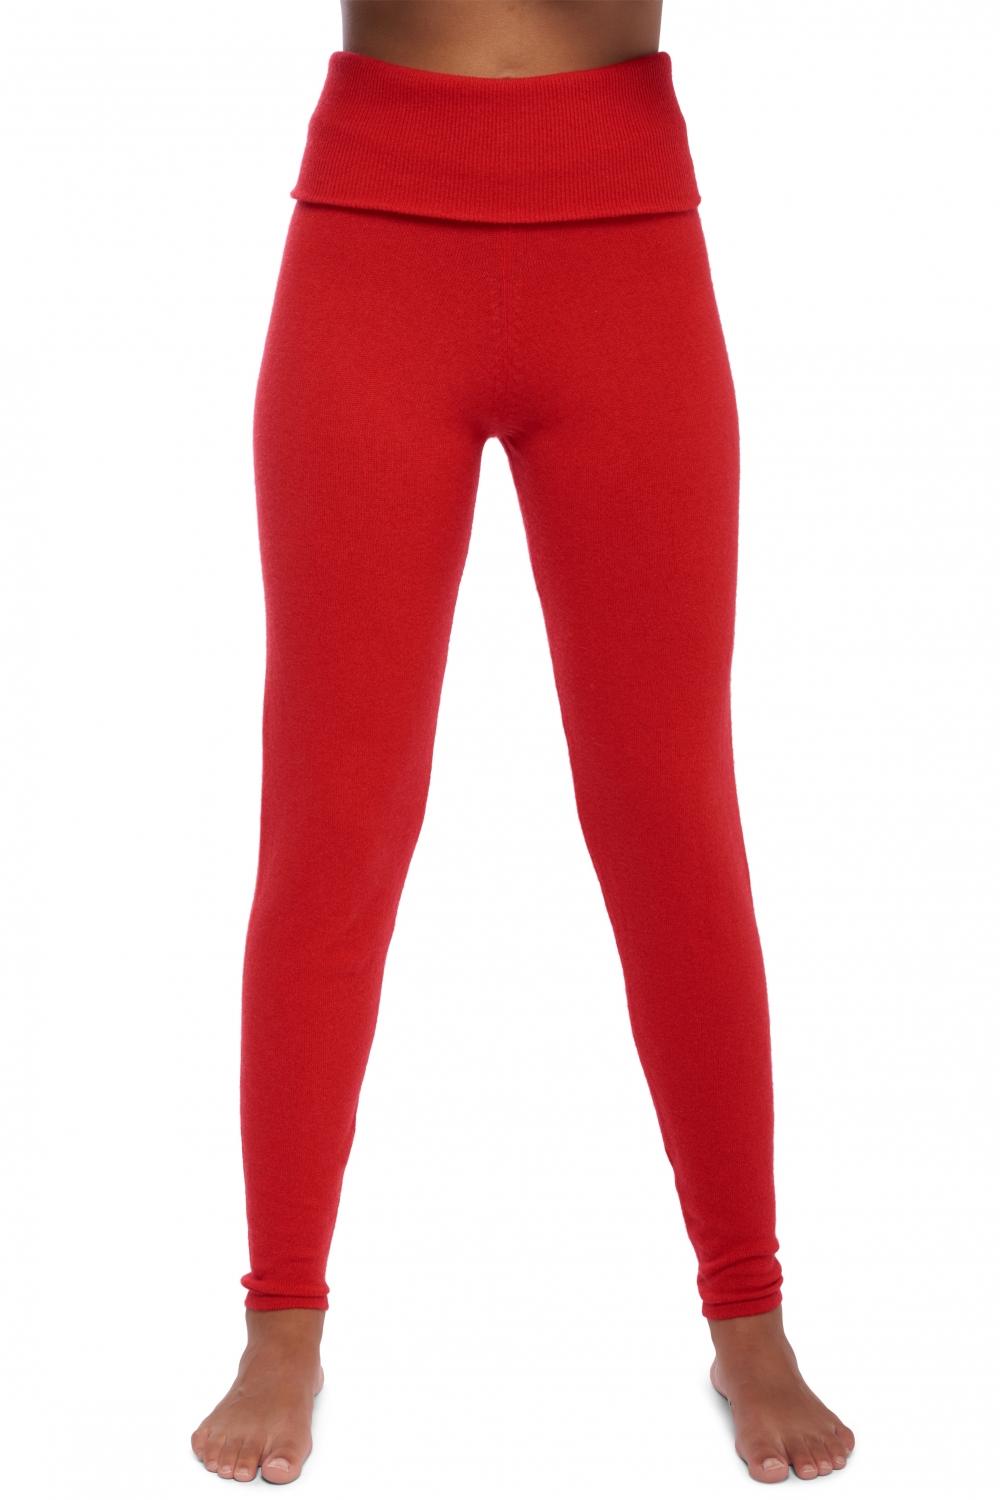 Cashmere accessoires kuschelwelt shirley rouge 4xl